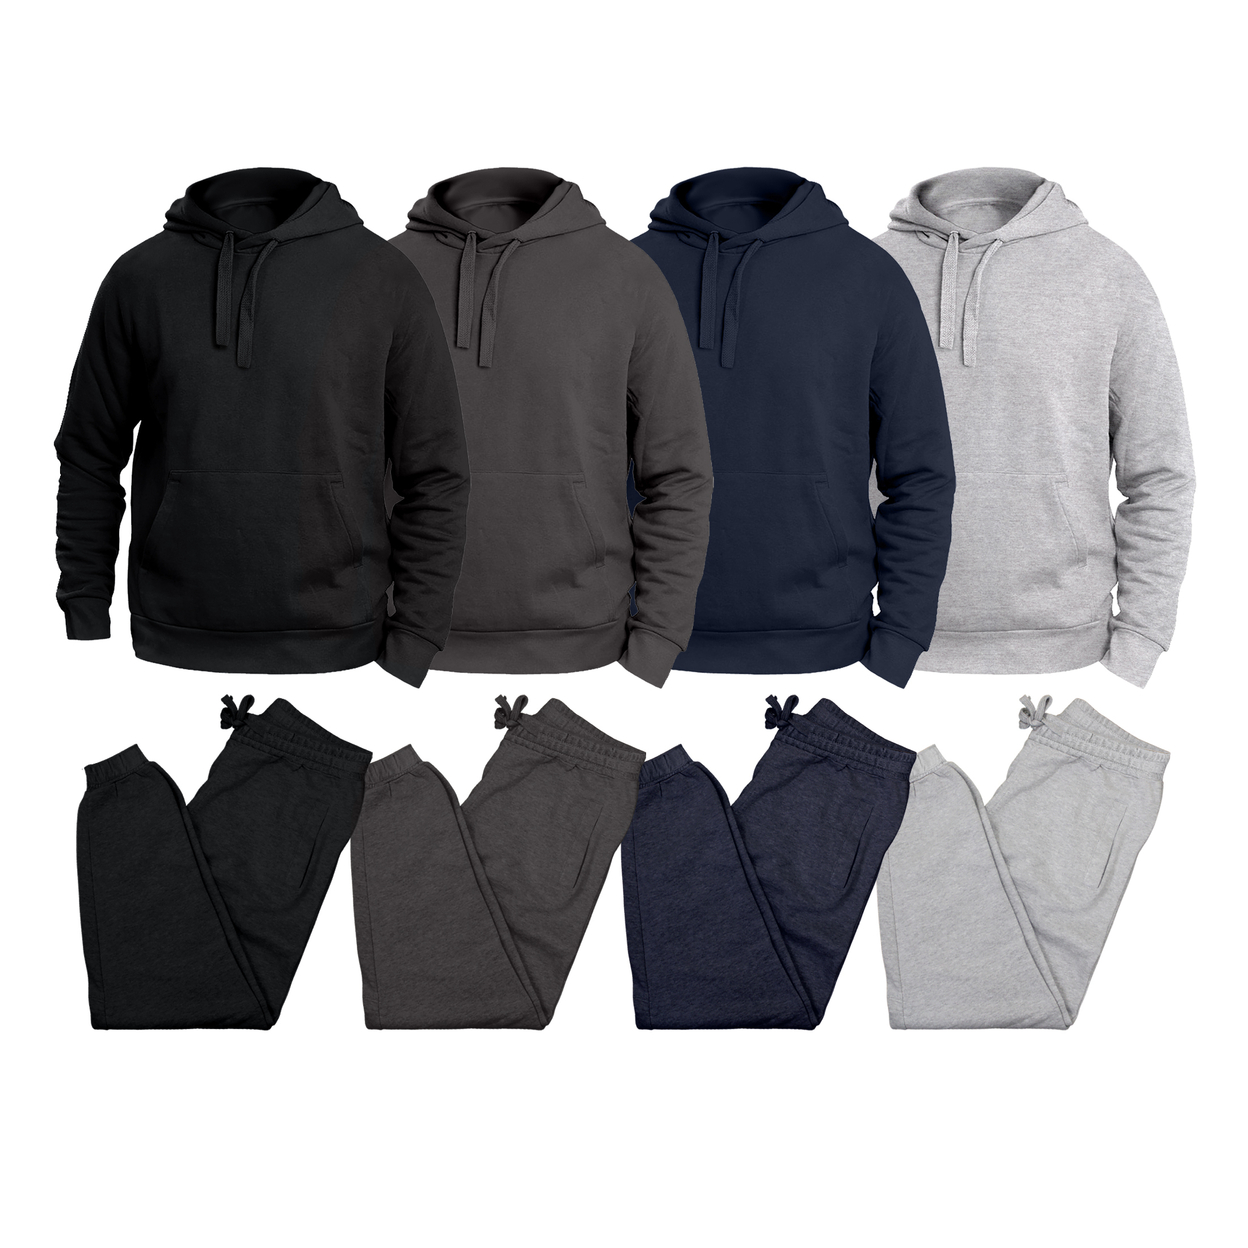 Men's Big & Tall Winter Warm Cozy Athletic Fleece Lined Multi-Pocket Cargo Sweatsuit - Black, Small